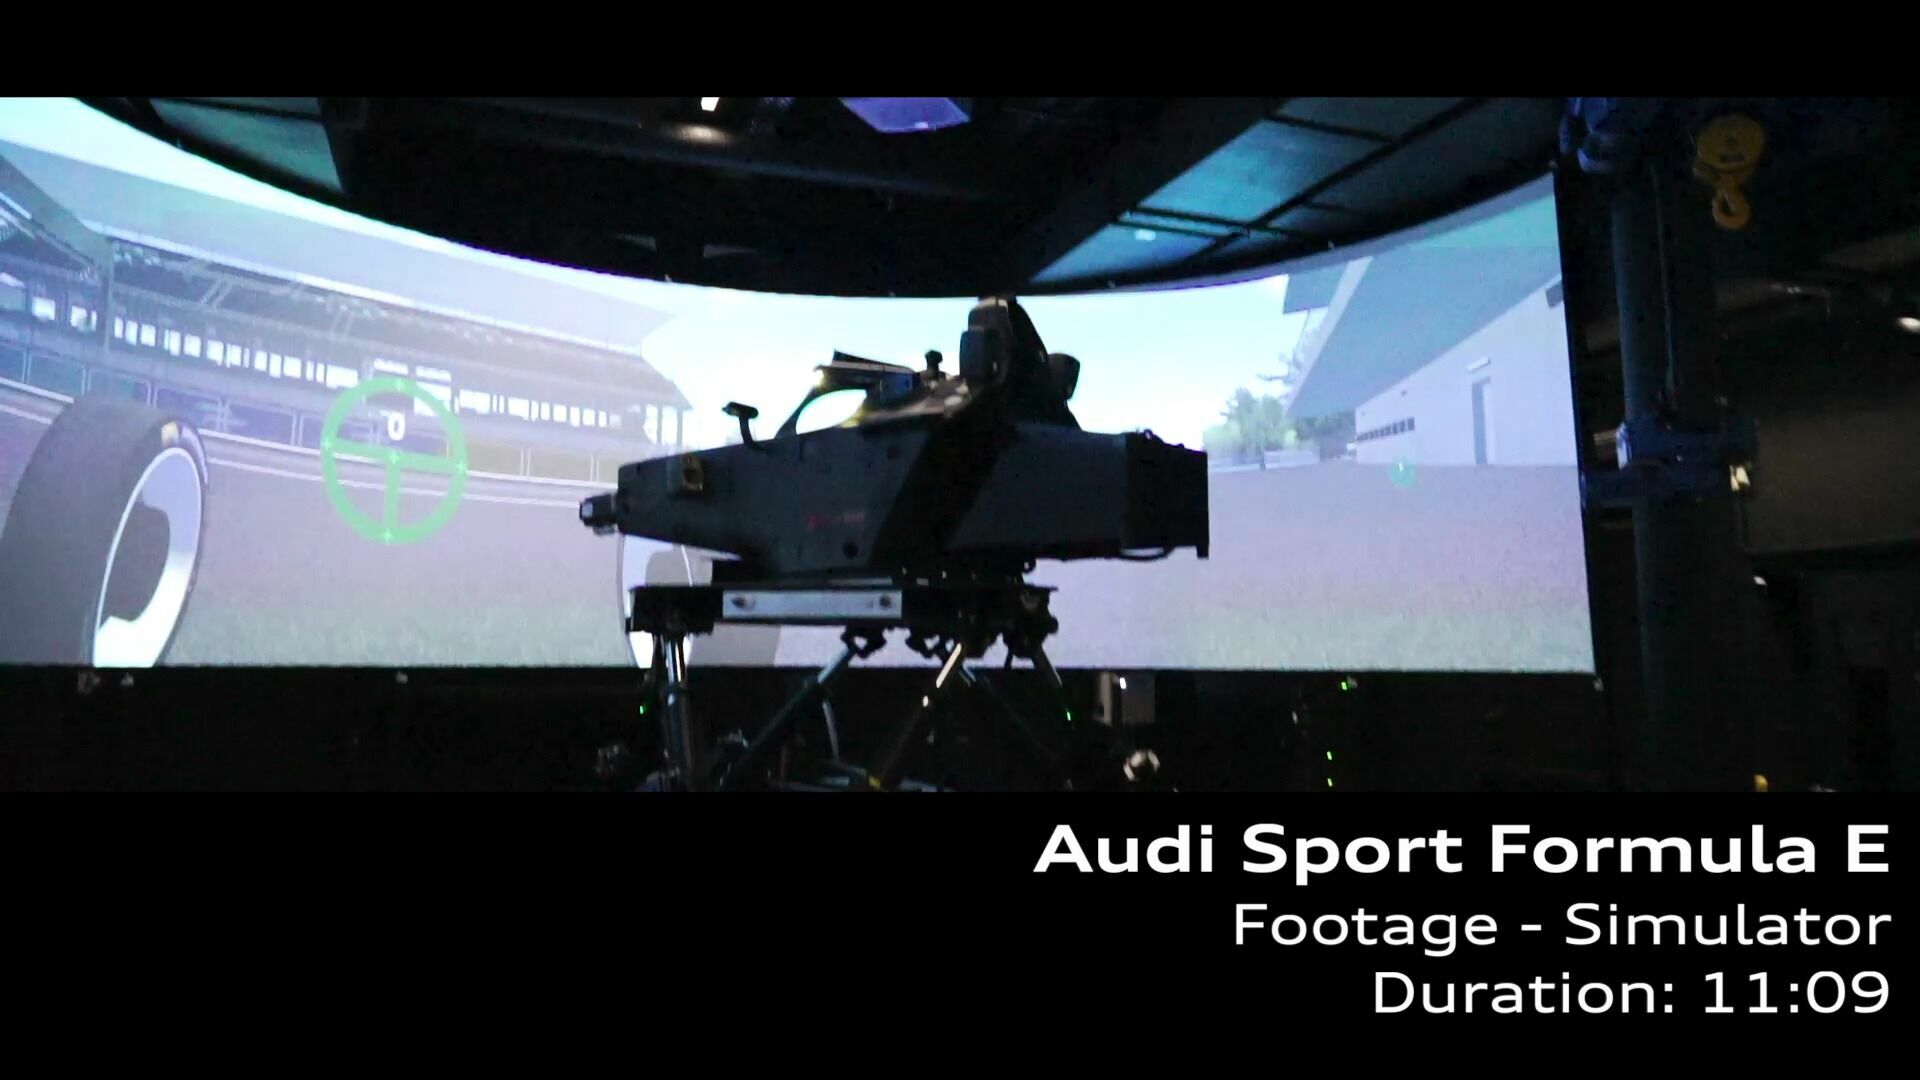 Footage: Audi Sport Formel E Simulator Neuburg